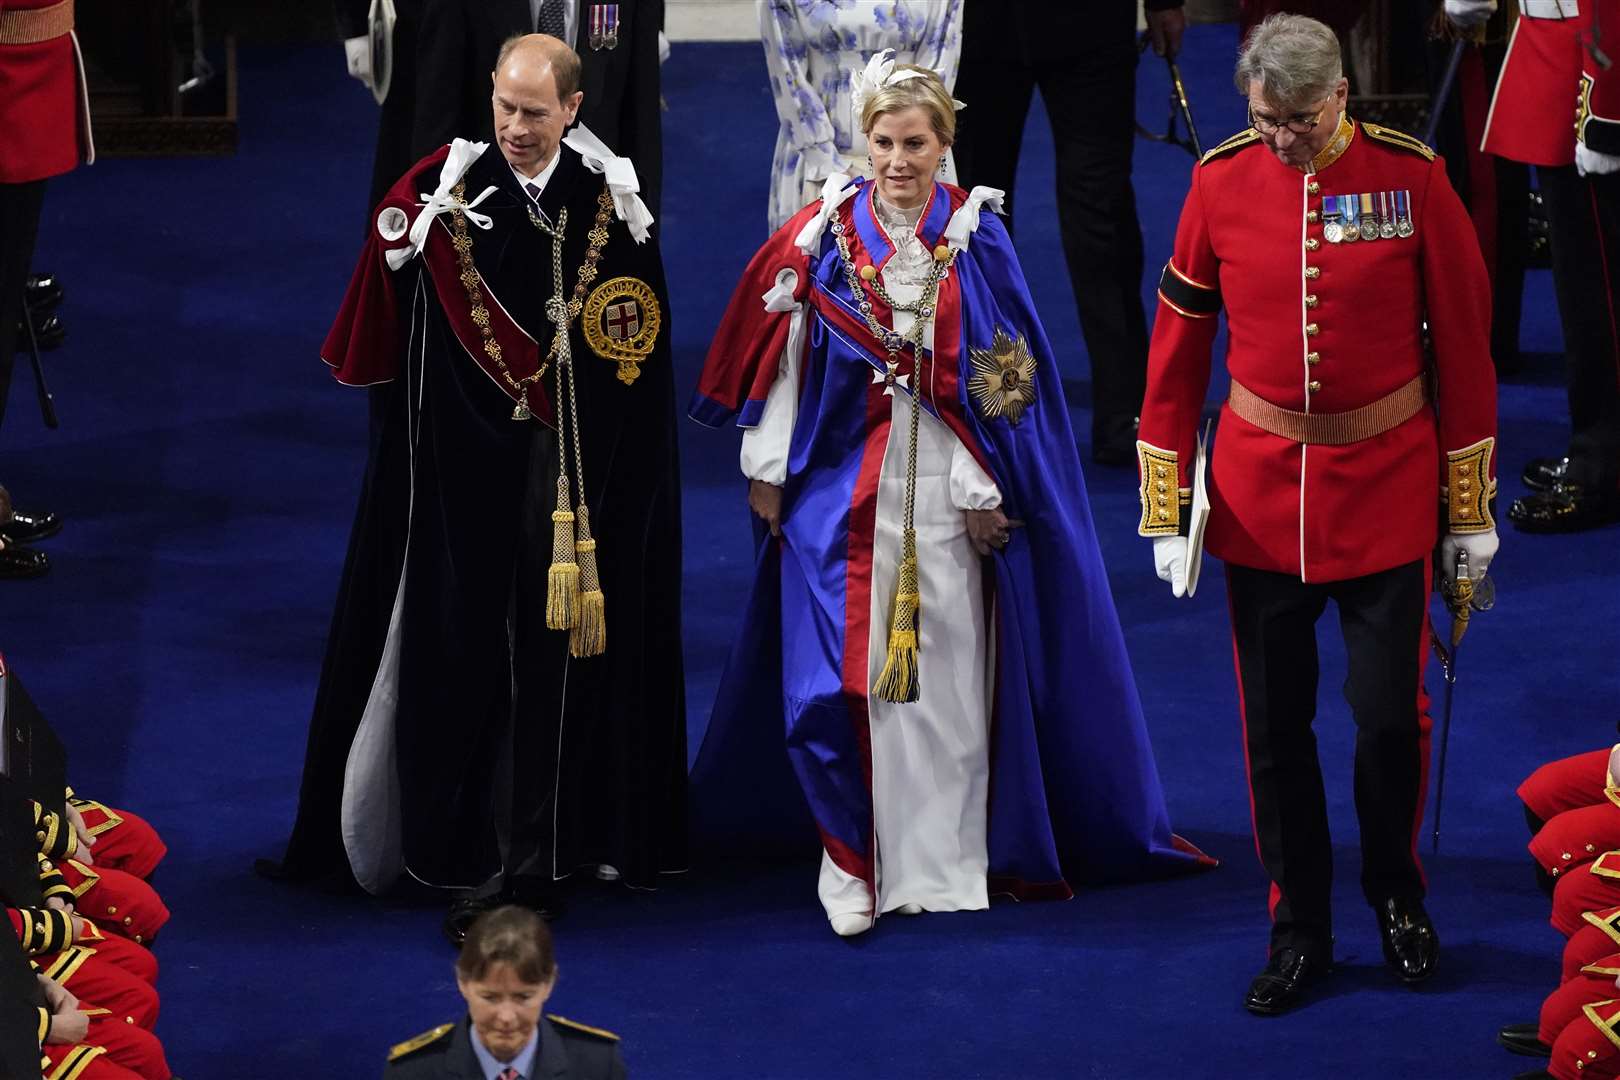 The Duke and Duchess of Edinburgh at the coronation (Andrew Matthews/PA)